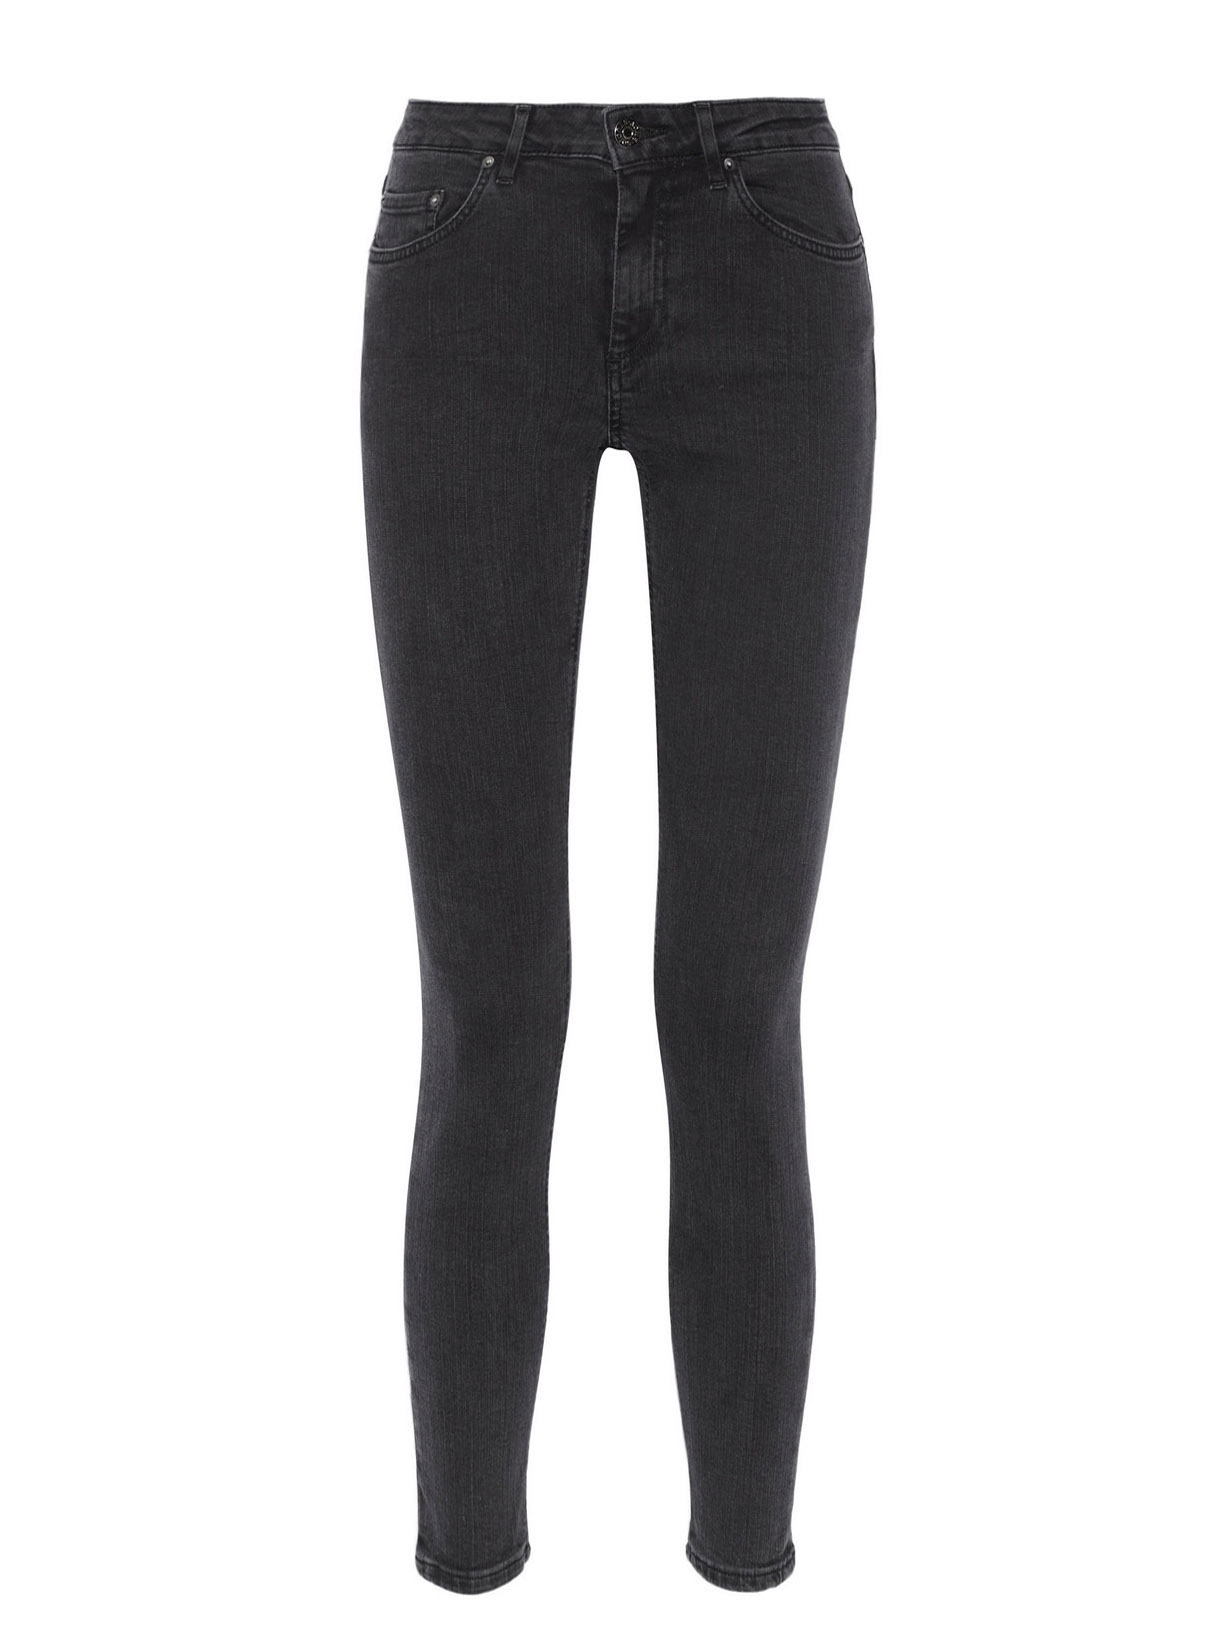 Lav Oxide Klimatiske bjerge Boutique ACNE STUDIOS " Skin 5 Pocket Used Black " mid-rise skinny dark  grey jeans Retail price $220 Size 30/34